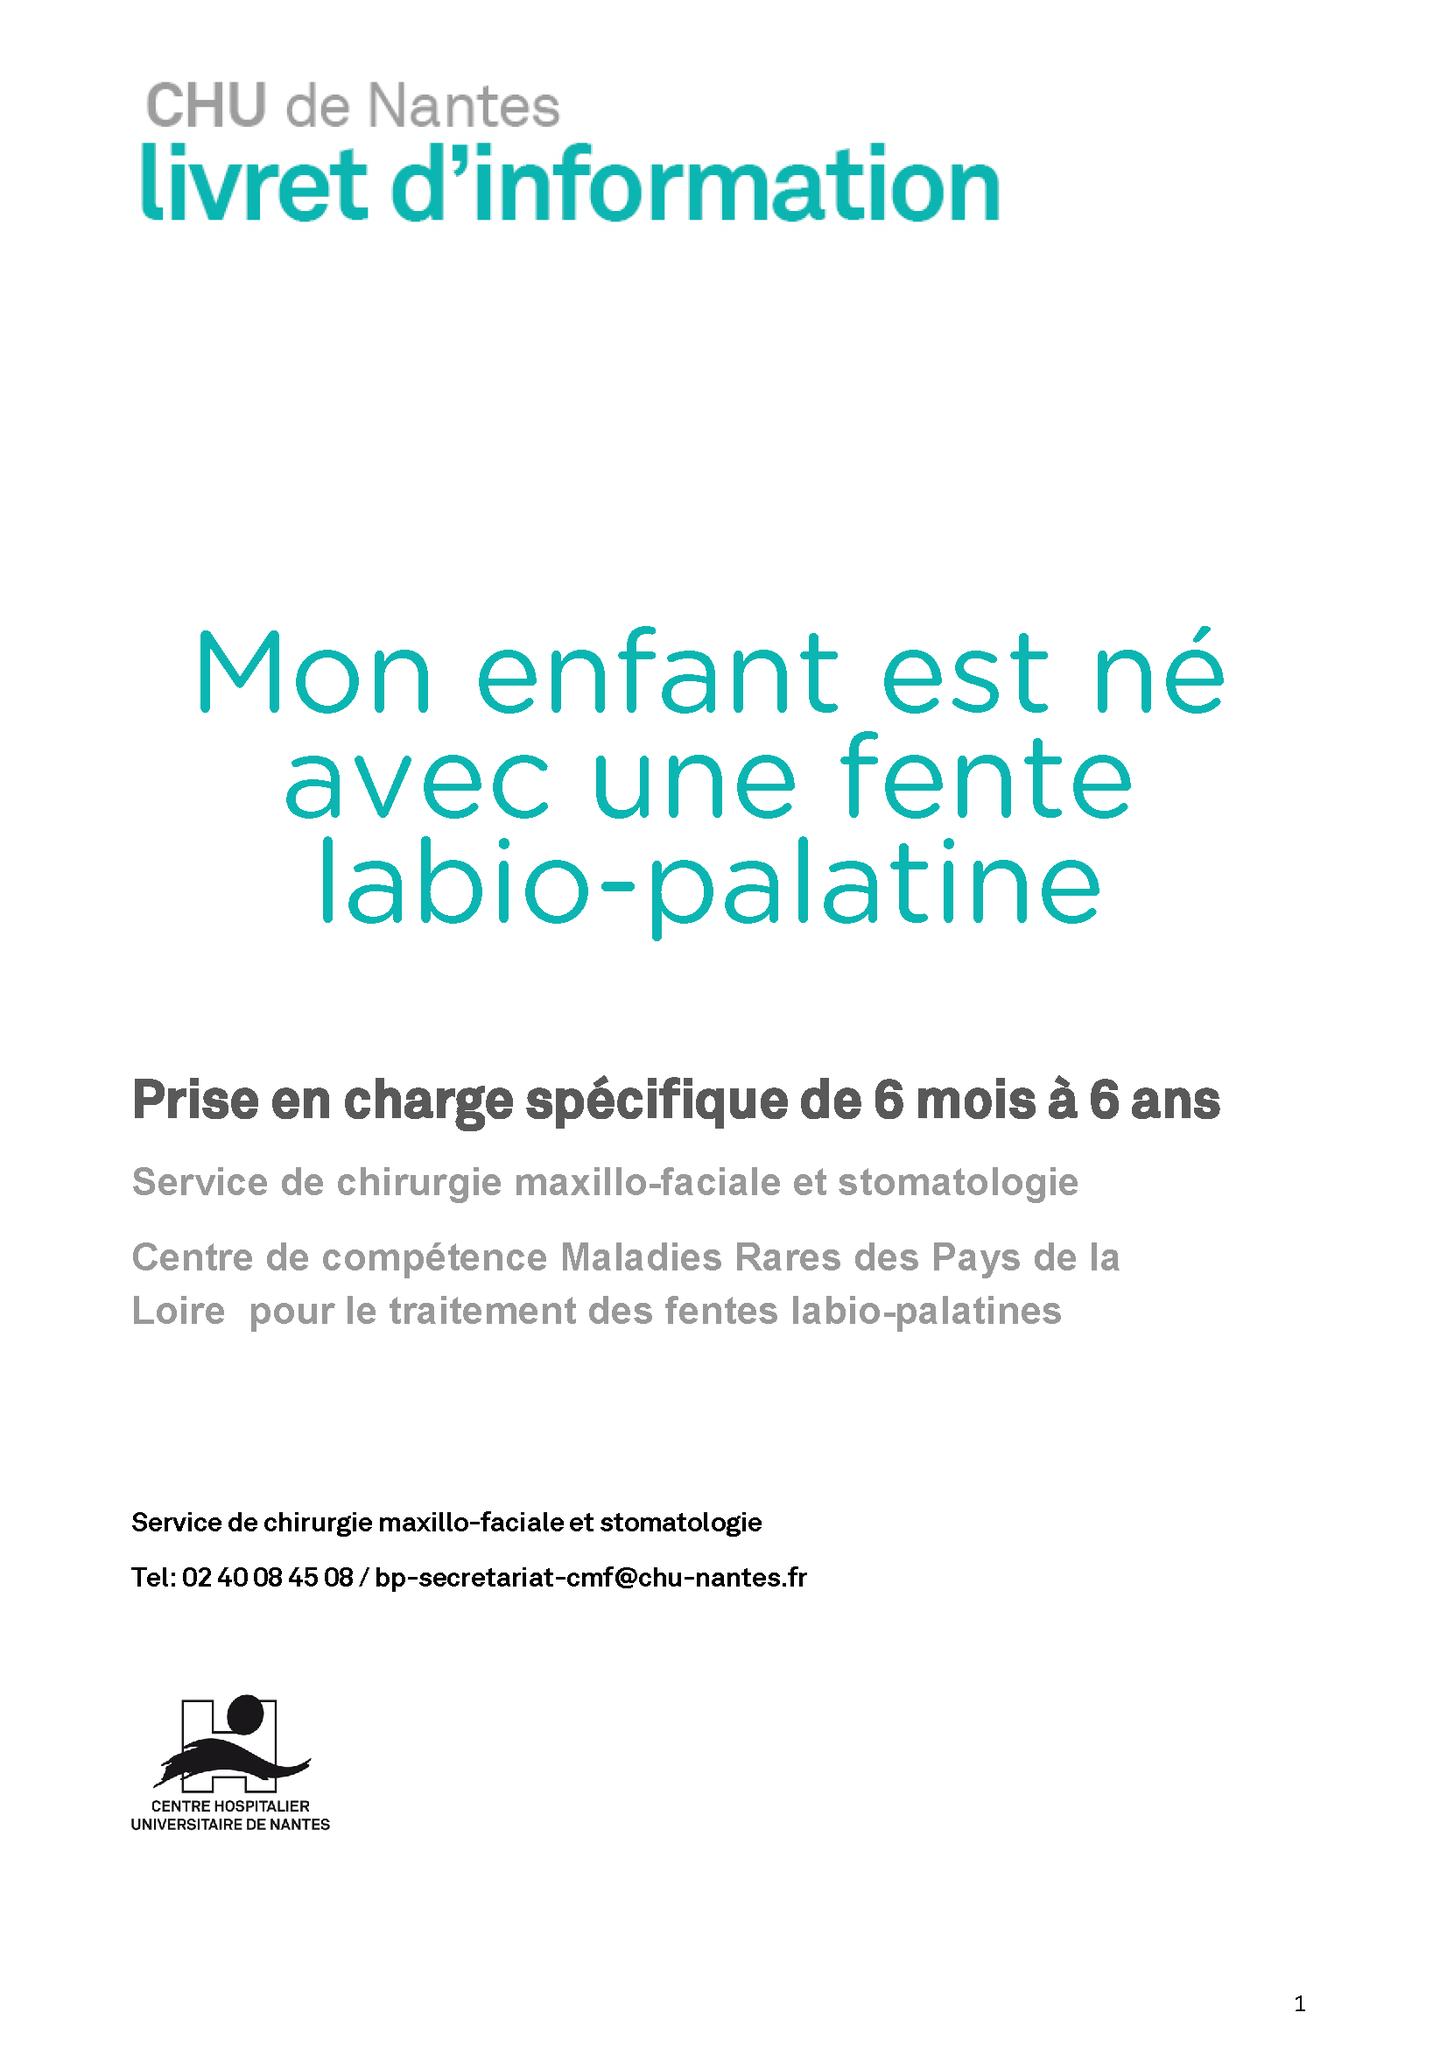 CCMR MAFACE CHU Nantes Livret d'information FLP 6mois 6ans